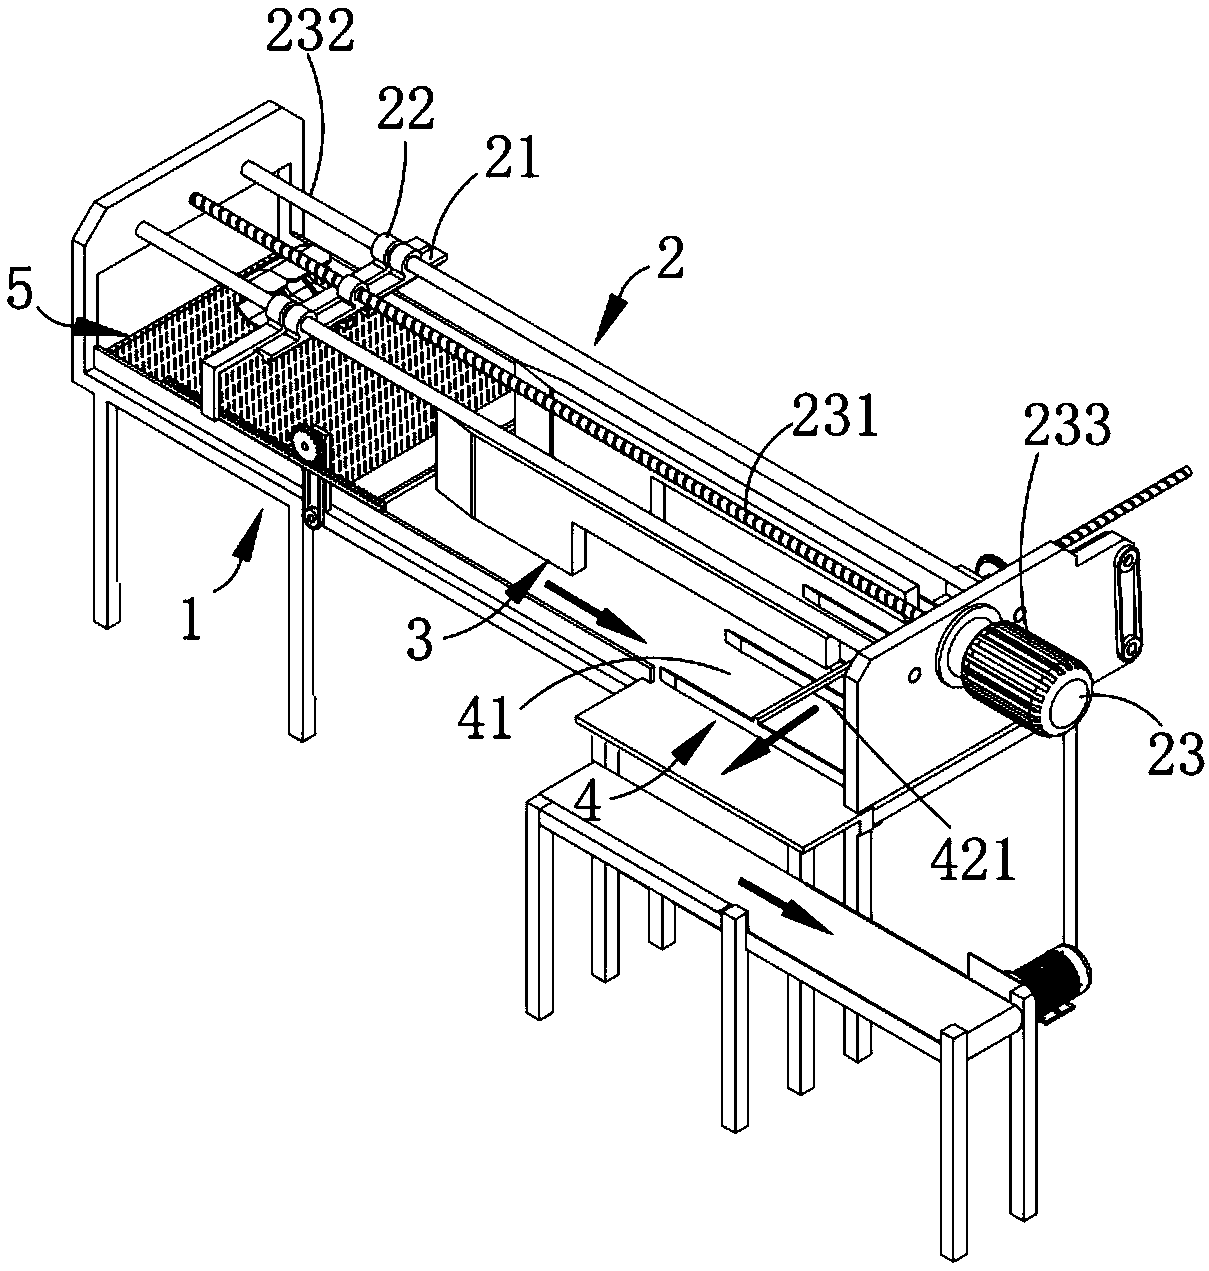 Automatic beam splitting equipment for linen yarn production